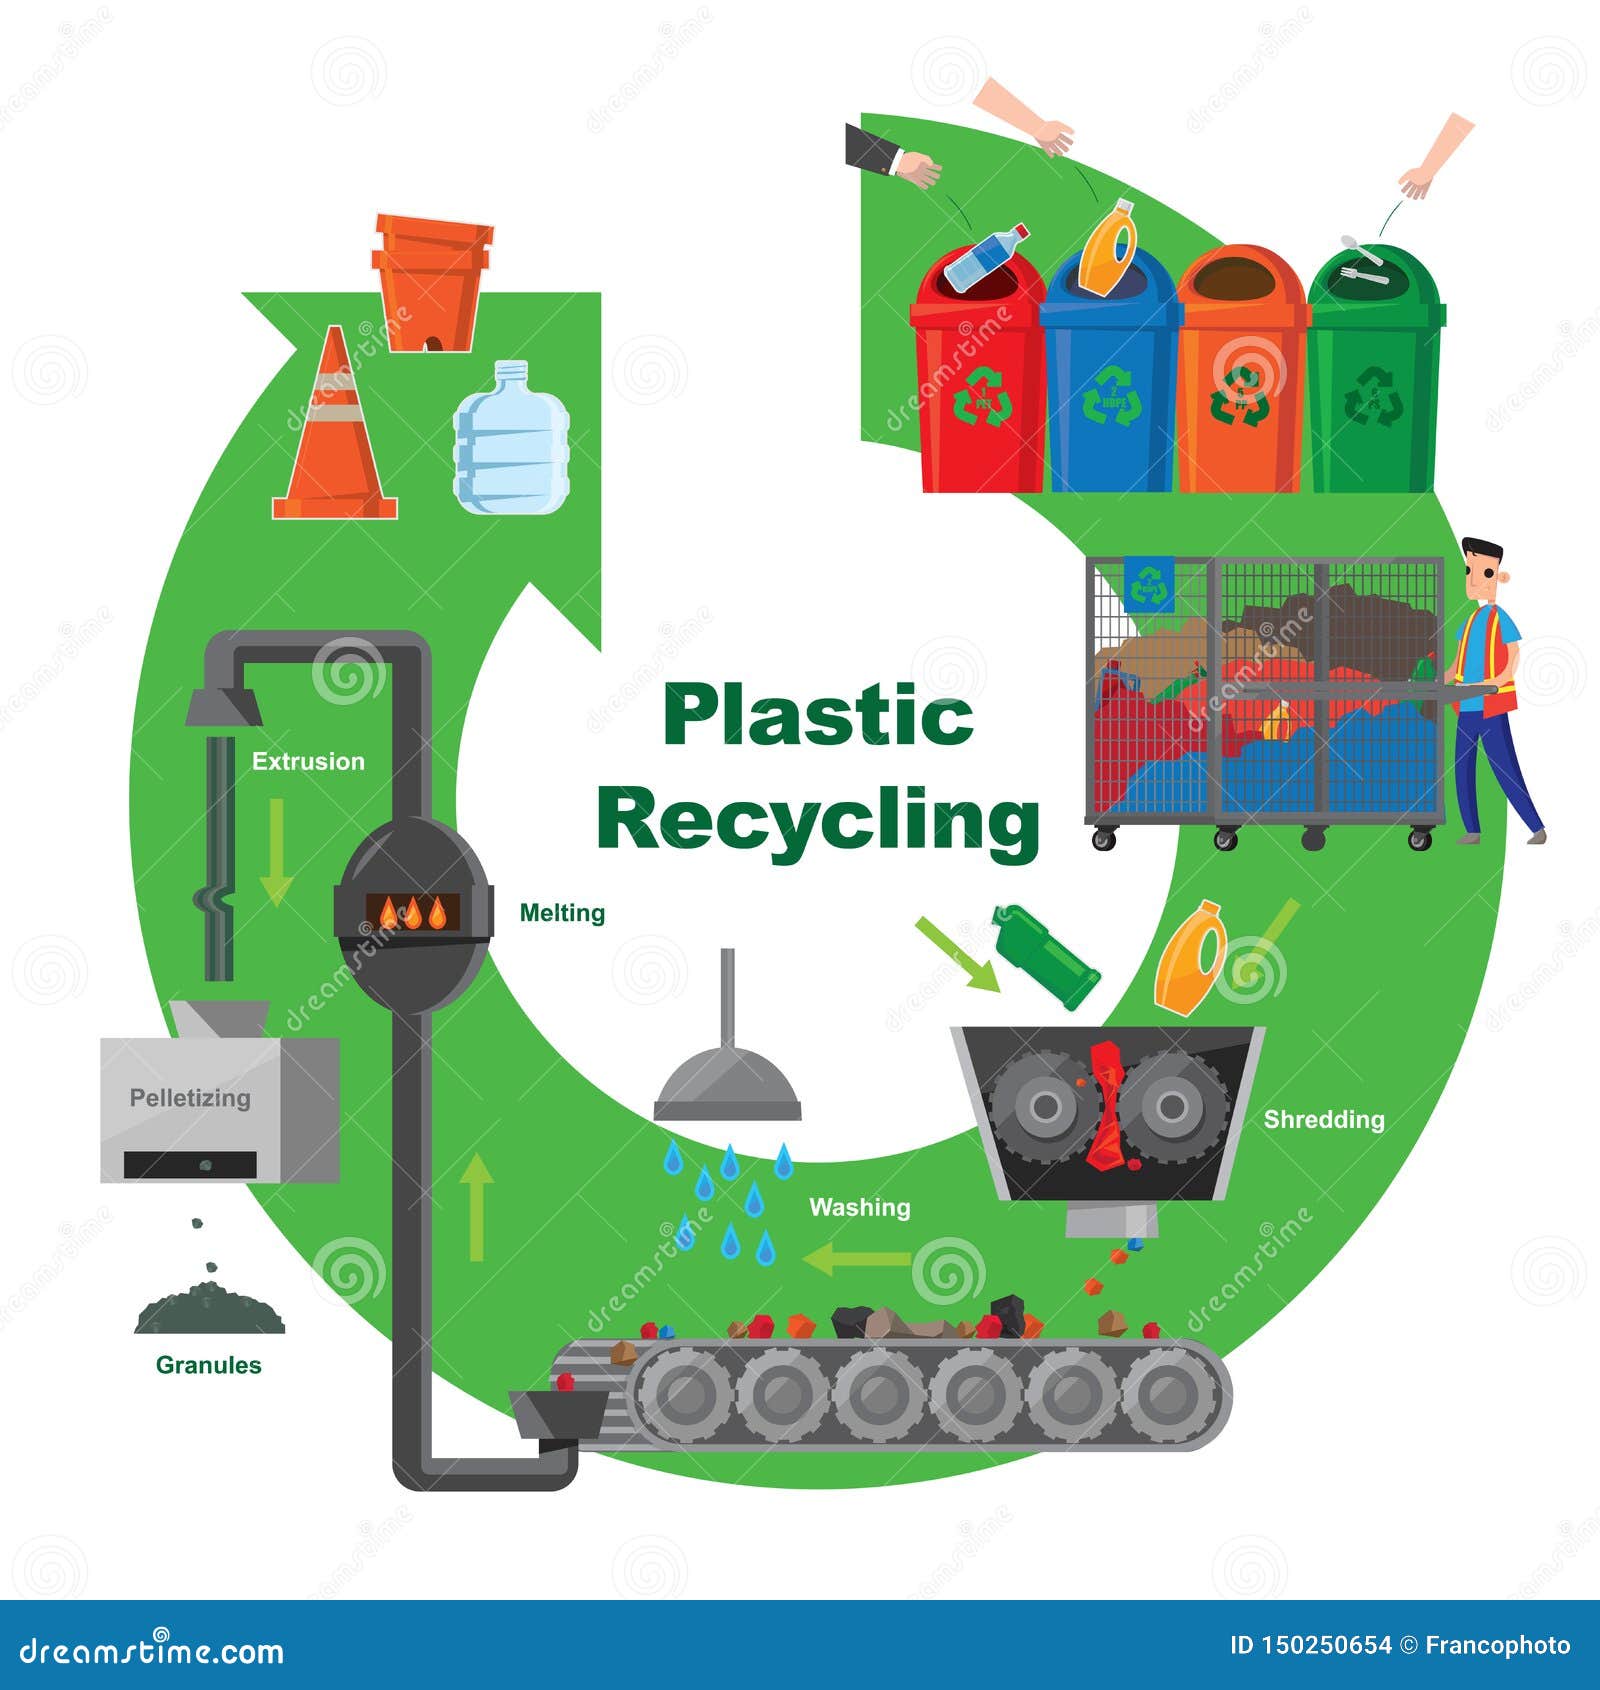 illustrative diagram of plastic recycling process